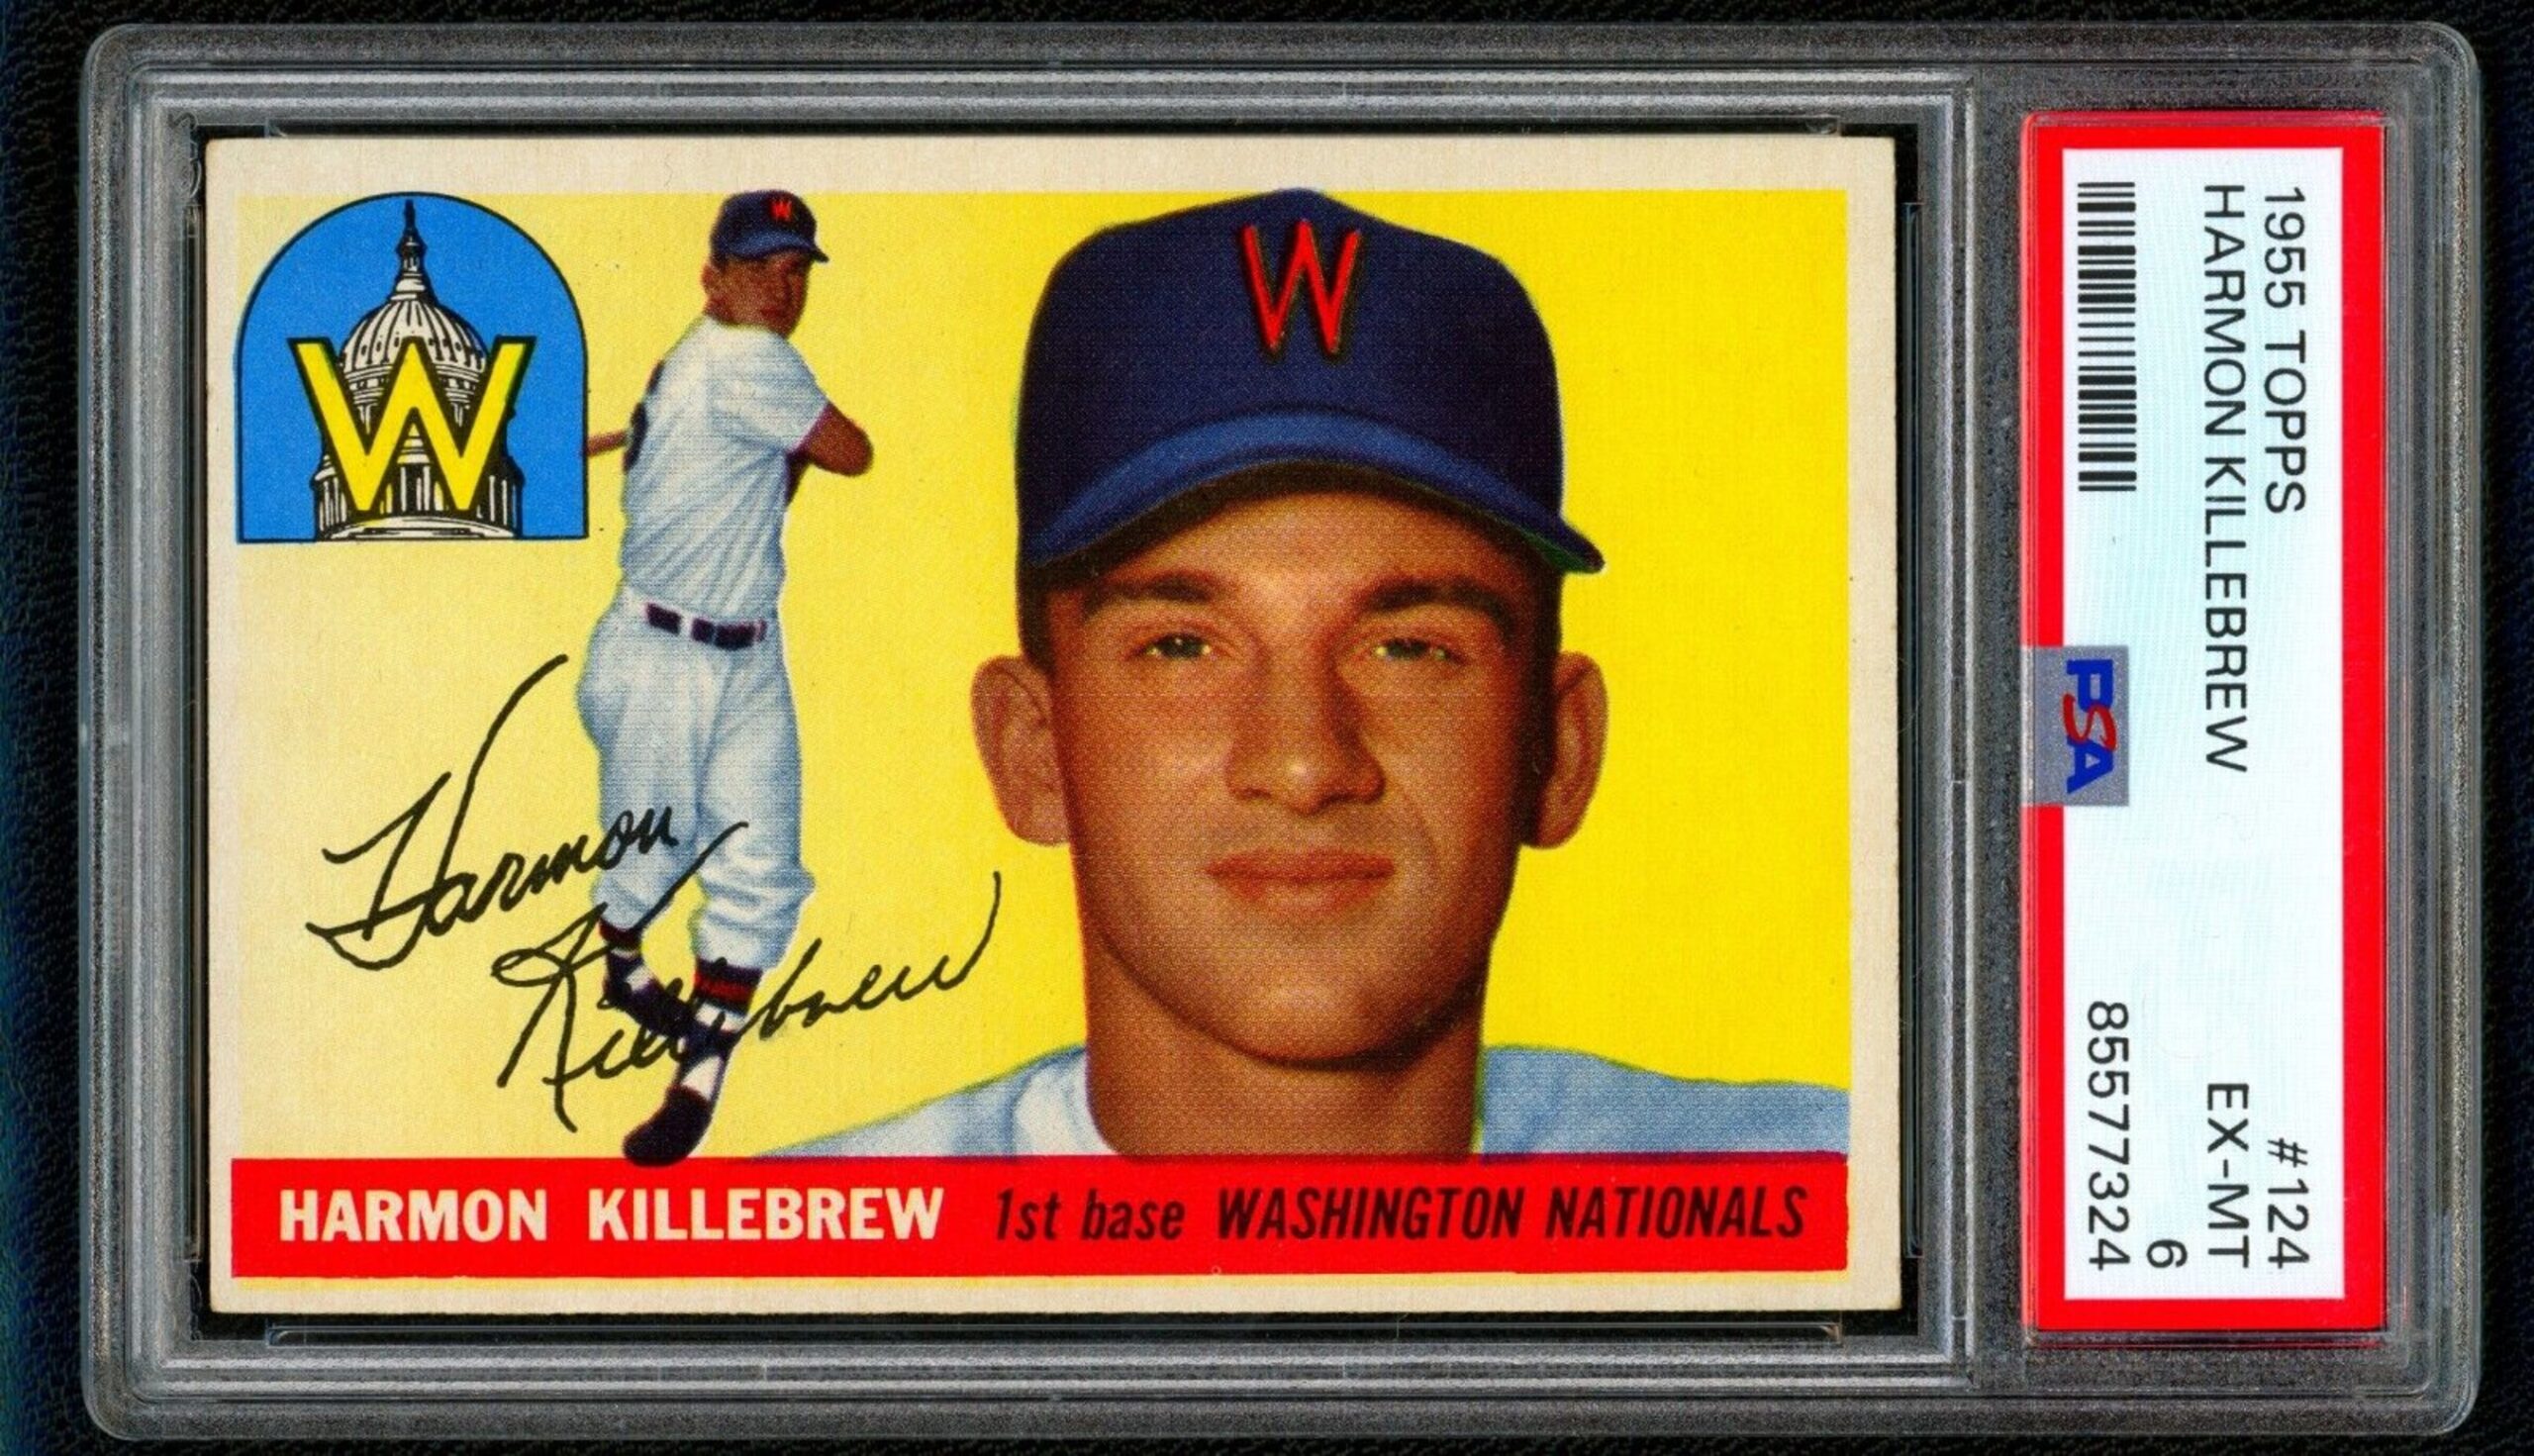 1955 Topps Harmon Killebrew rookie card